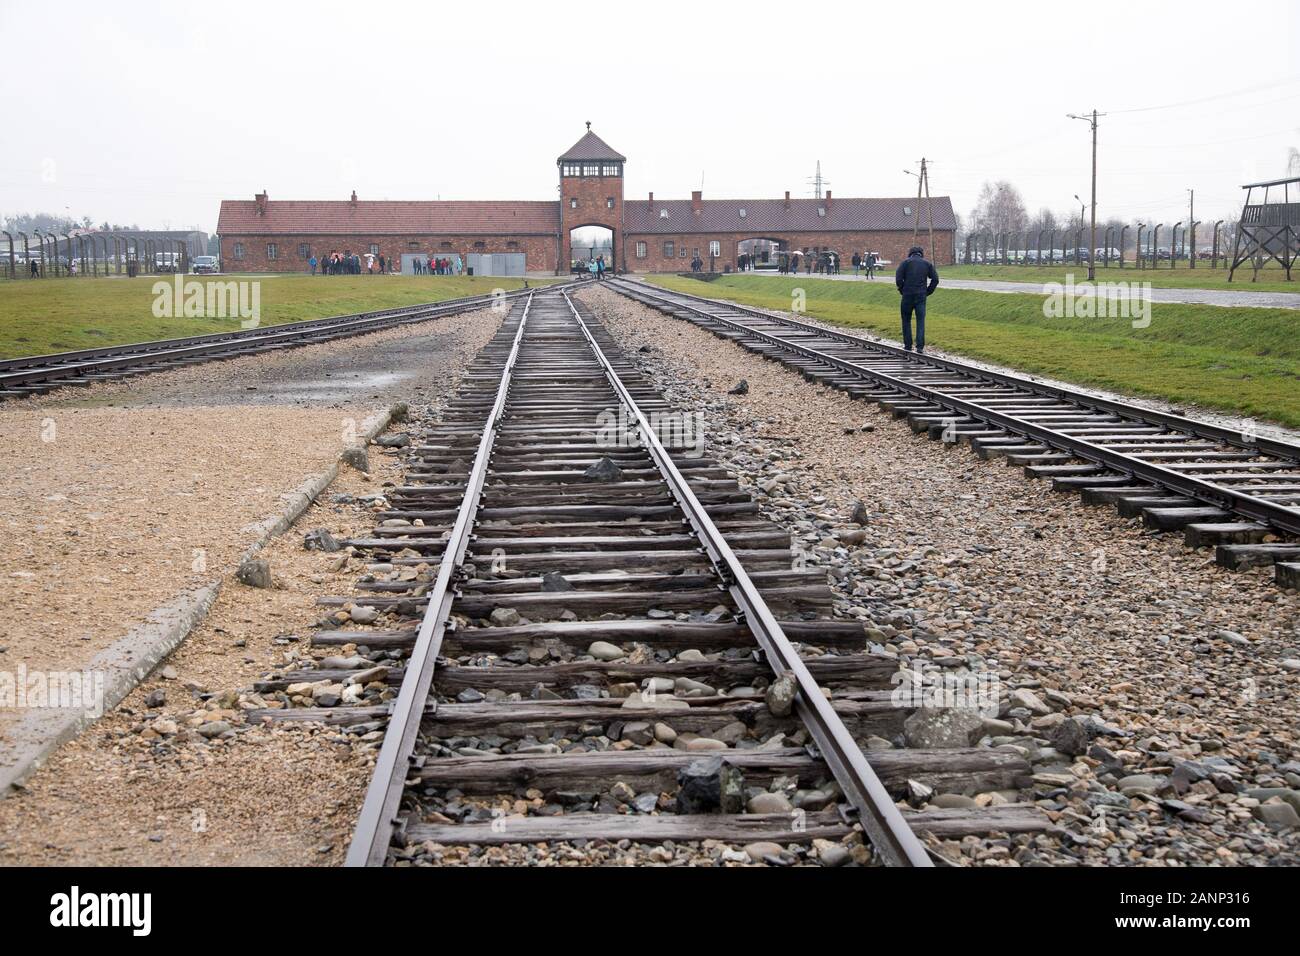 Gatehouse e Judenrampe (rampa ebraica) nella Germania nazista Konzentrationslager Auschwitz II Birkenau (Auschwitz II Birkenau sterminio camp) utilizzato da 1 Foto Stock